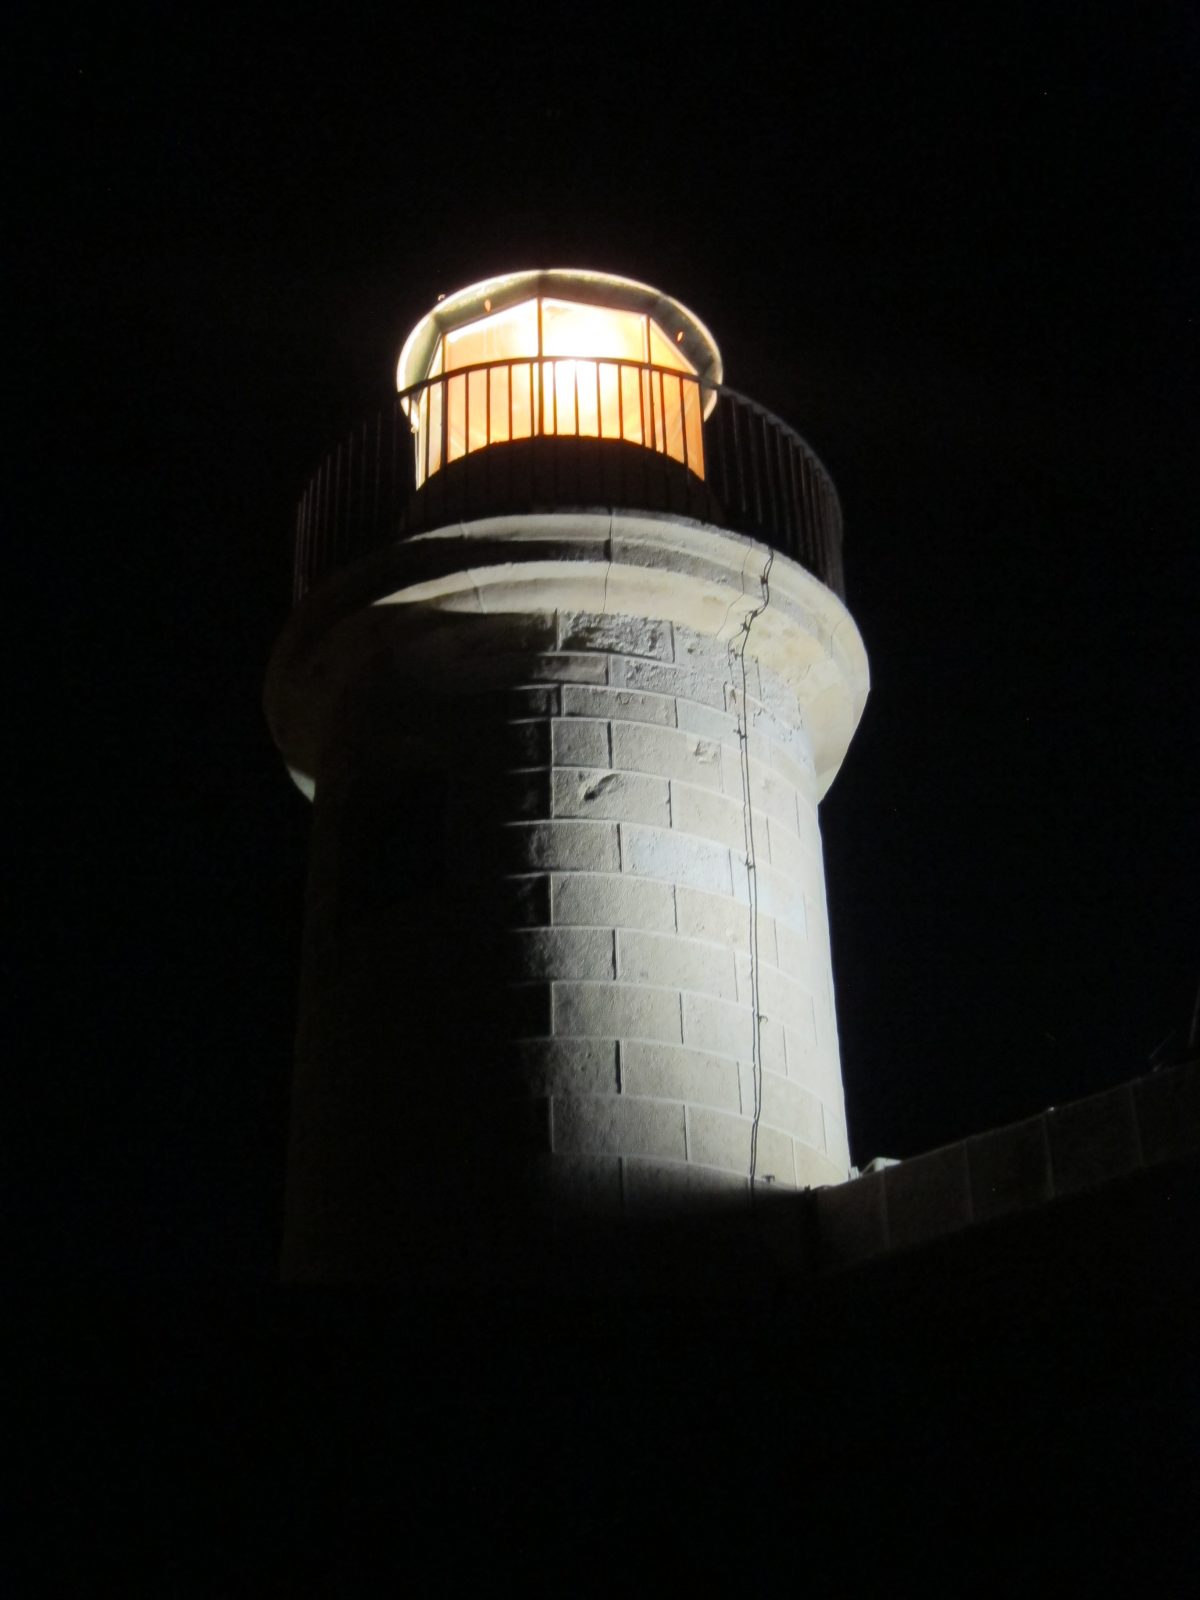 Visita nocturna al faro de Roquetas por Araceli (2ª parte)